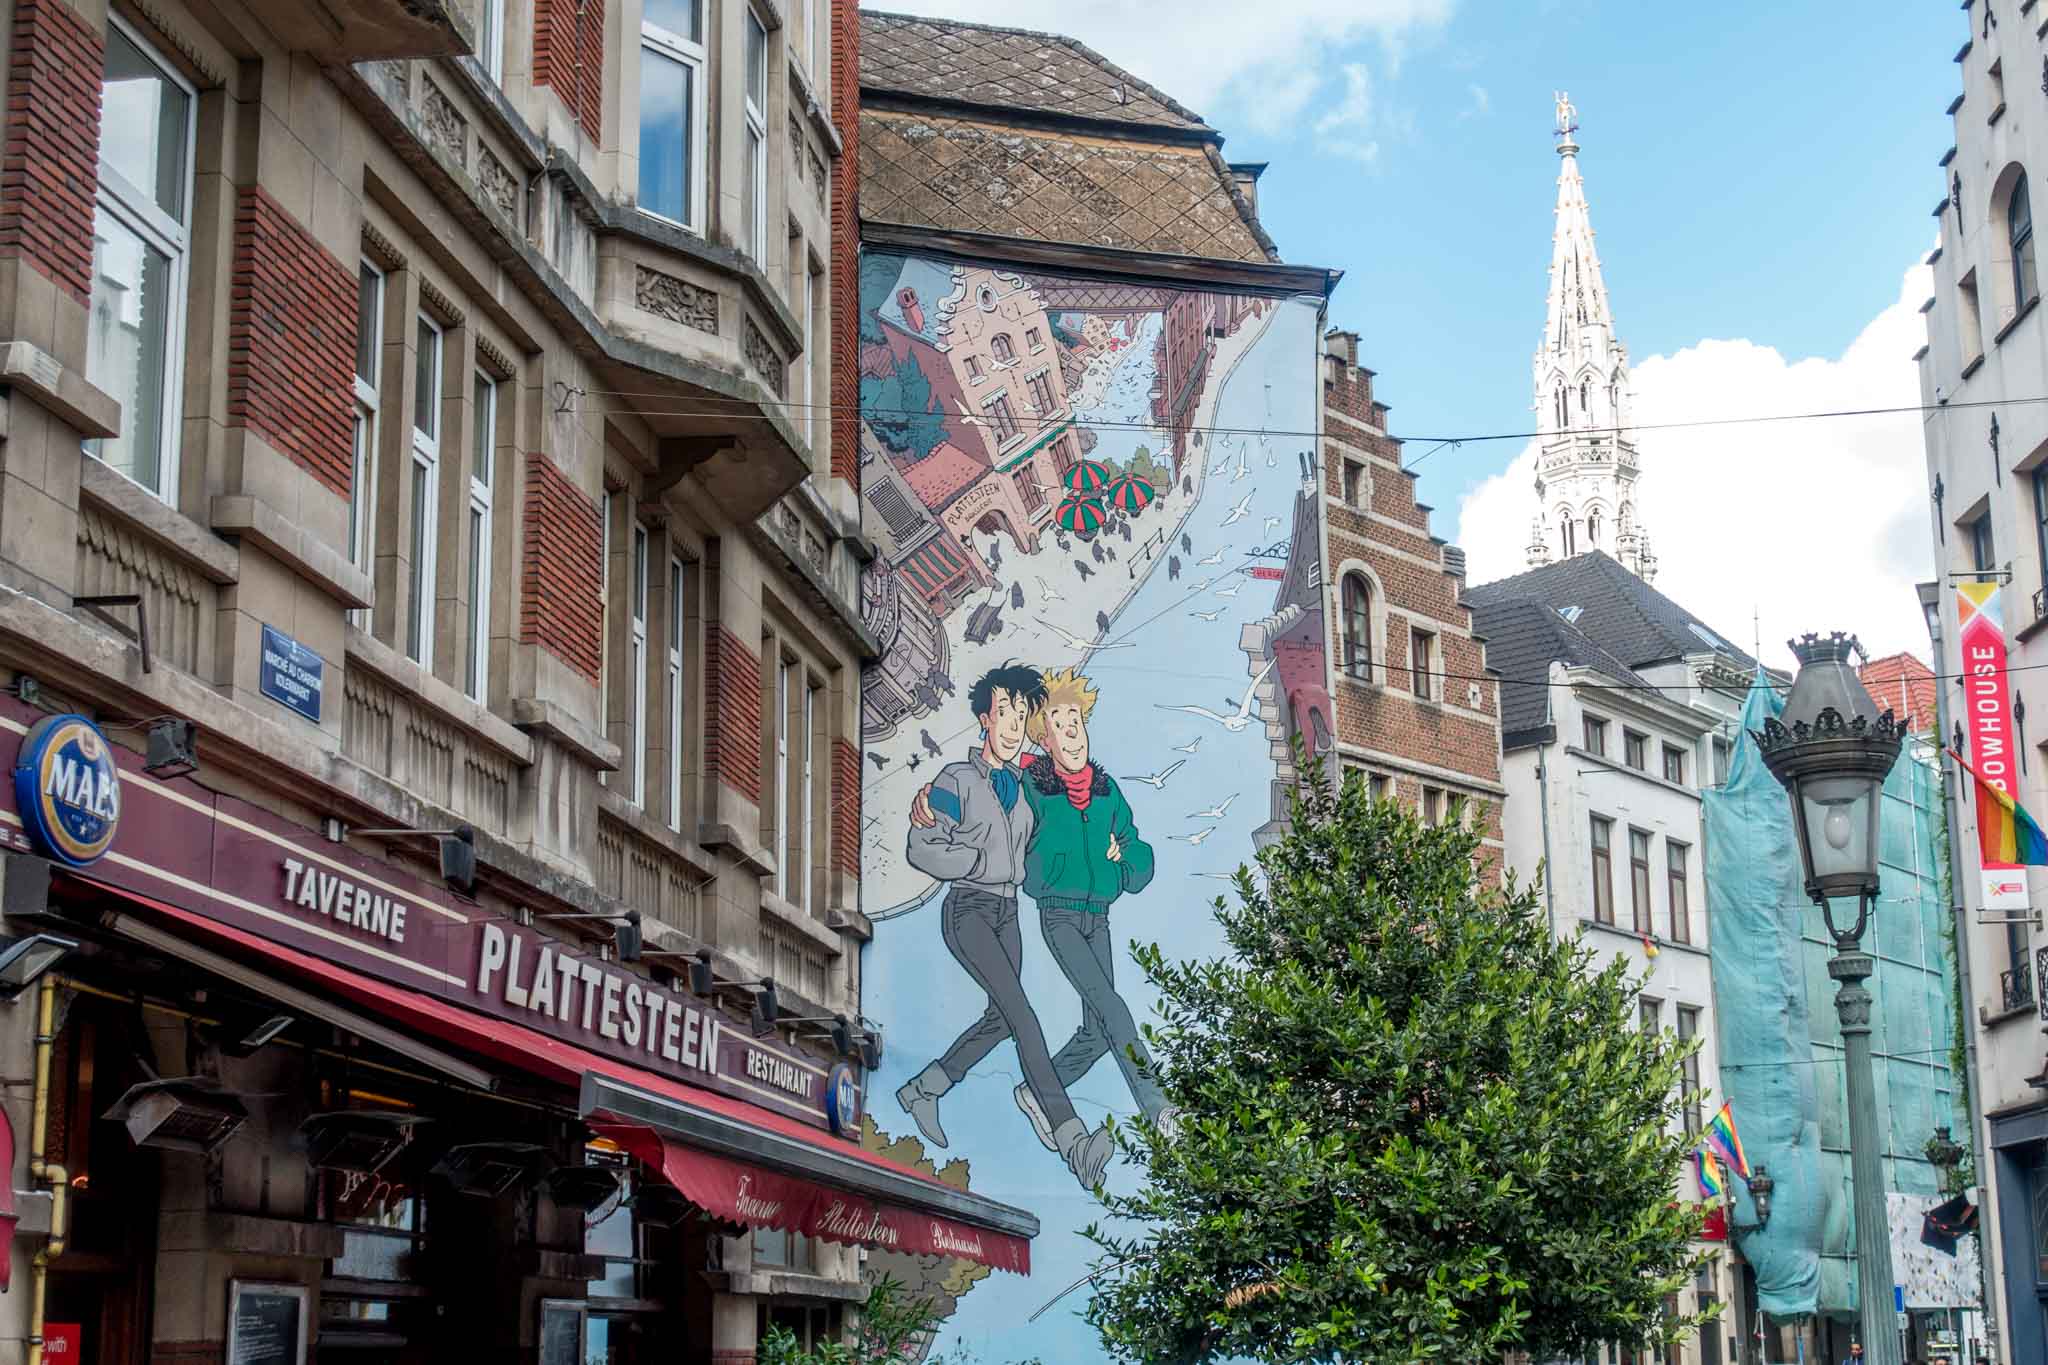 Street art mural of couple walking down the street in Brussels.